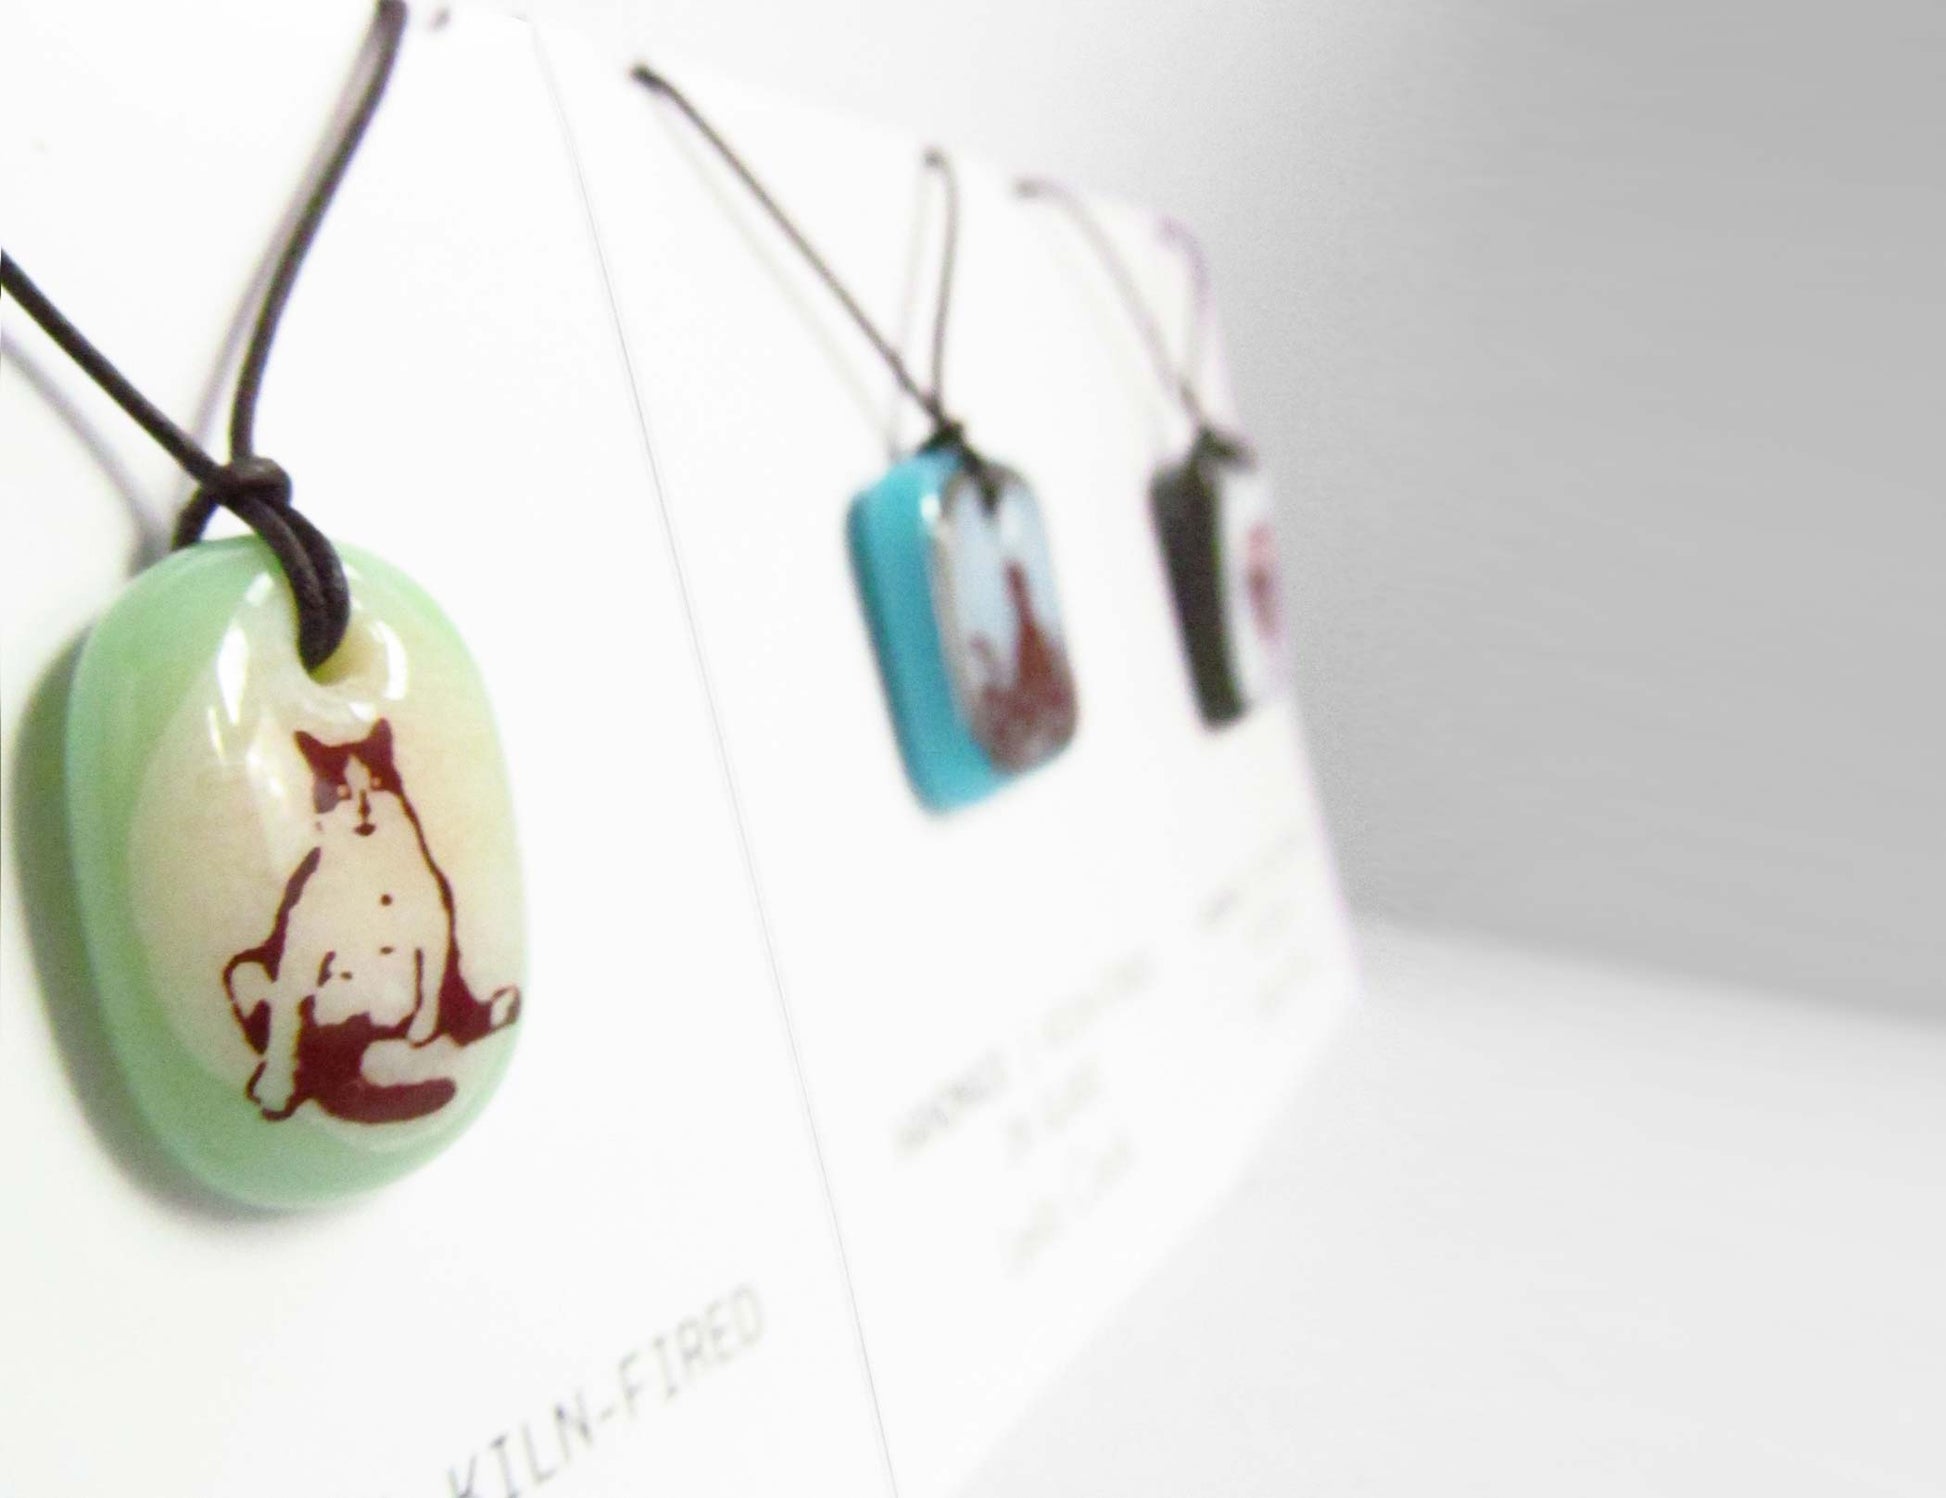 Cute bird jewellery handmade in glass by Leila Cools. 